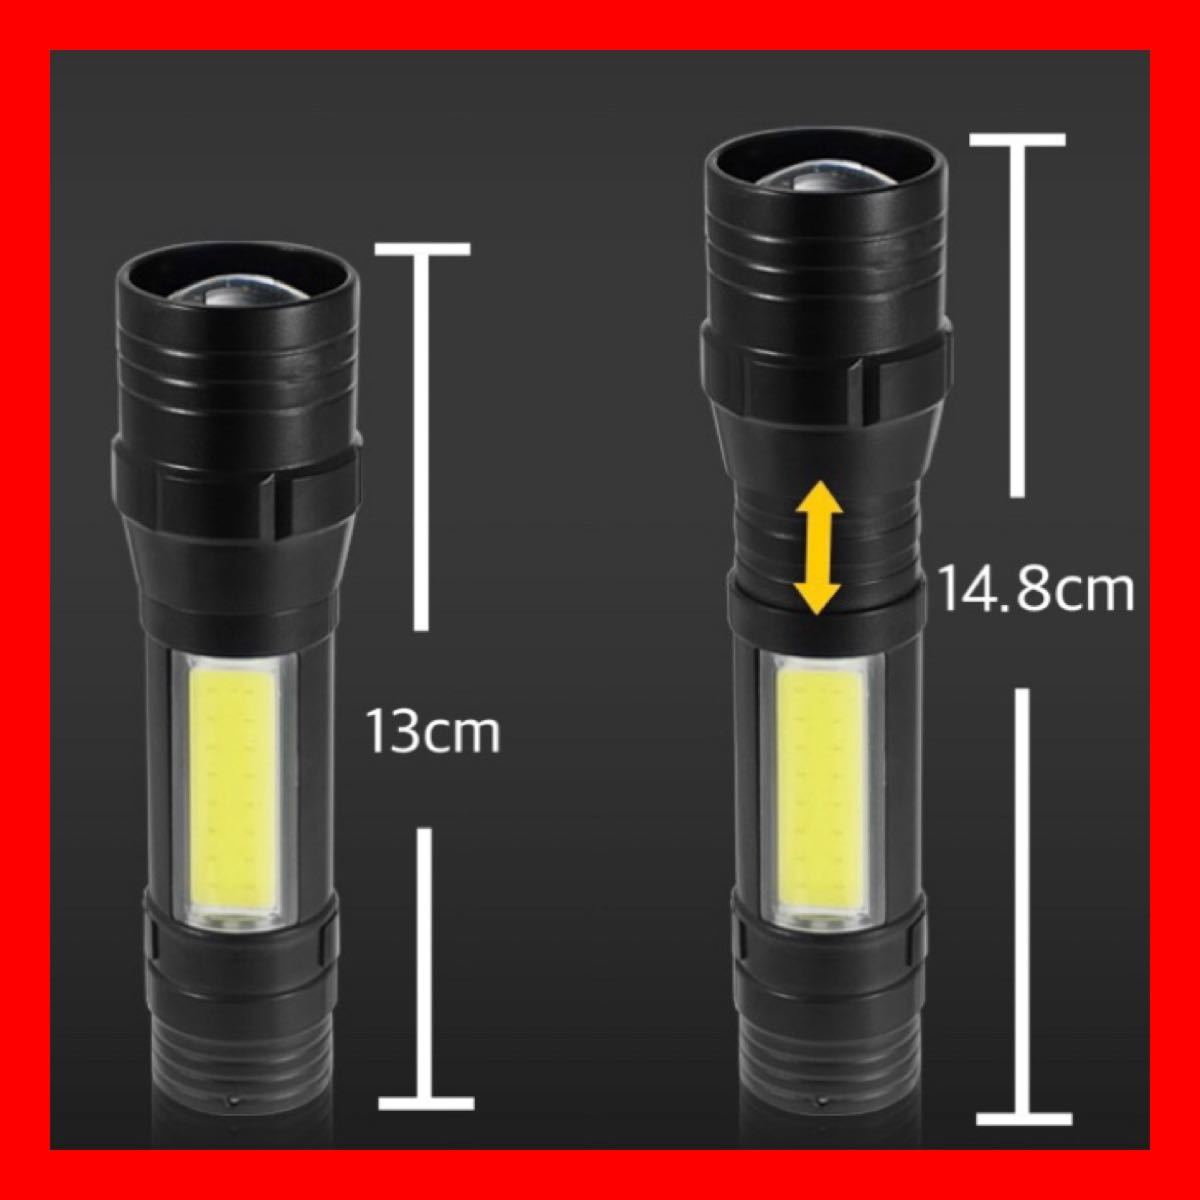 LED懐中電灯 LEDハンディライト ハンディライト 懐中電灯 フラッシュライト 高輝度LED 高輝度 USB 充電式 安心